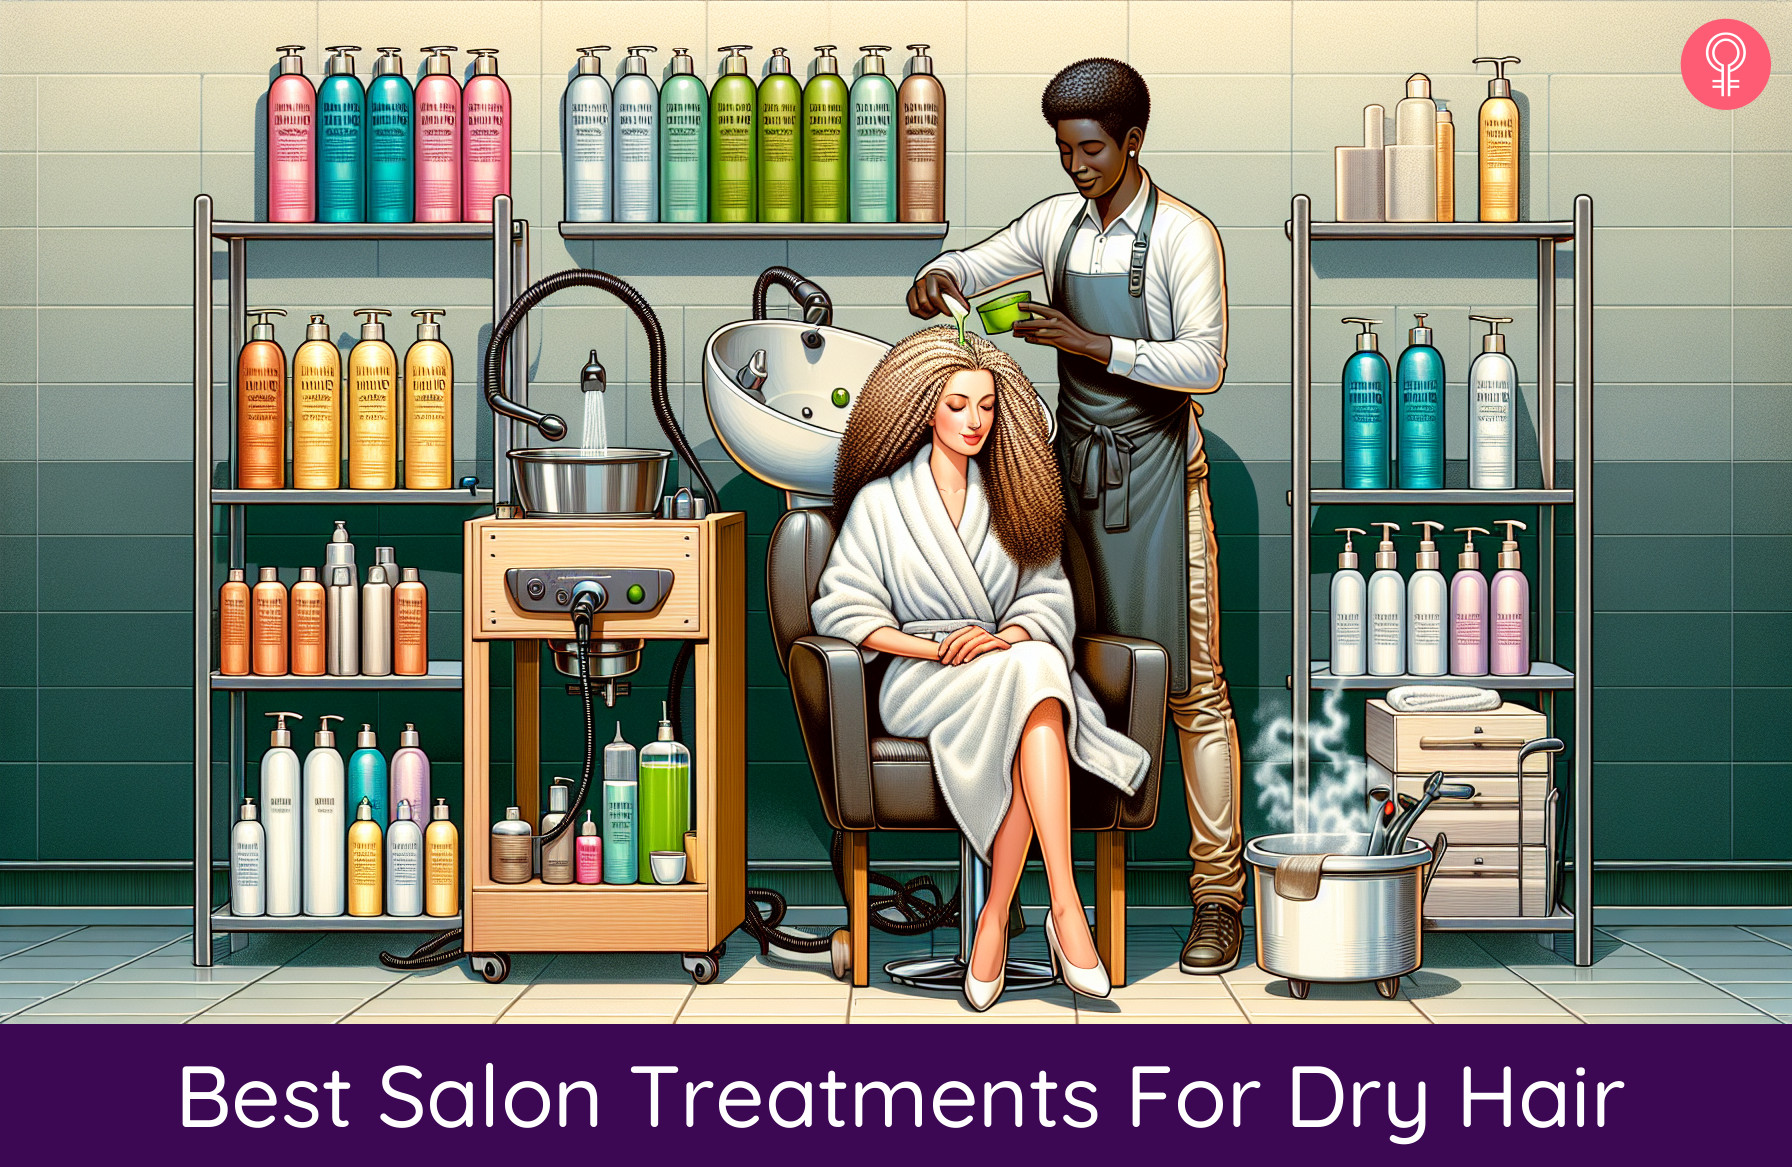 Salon Treatments For Dry Hair_illustration